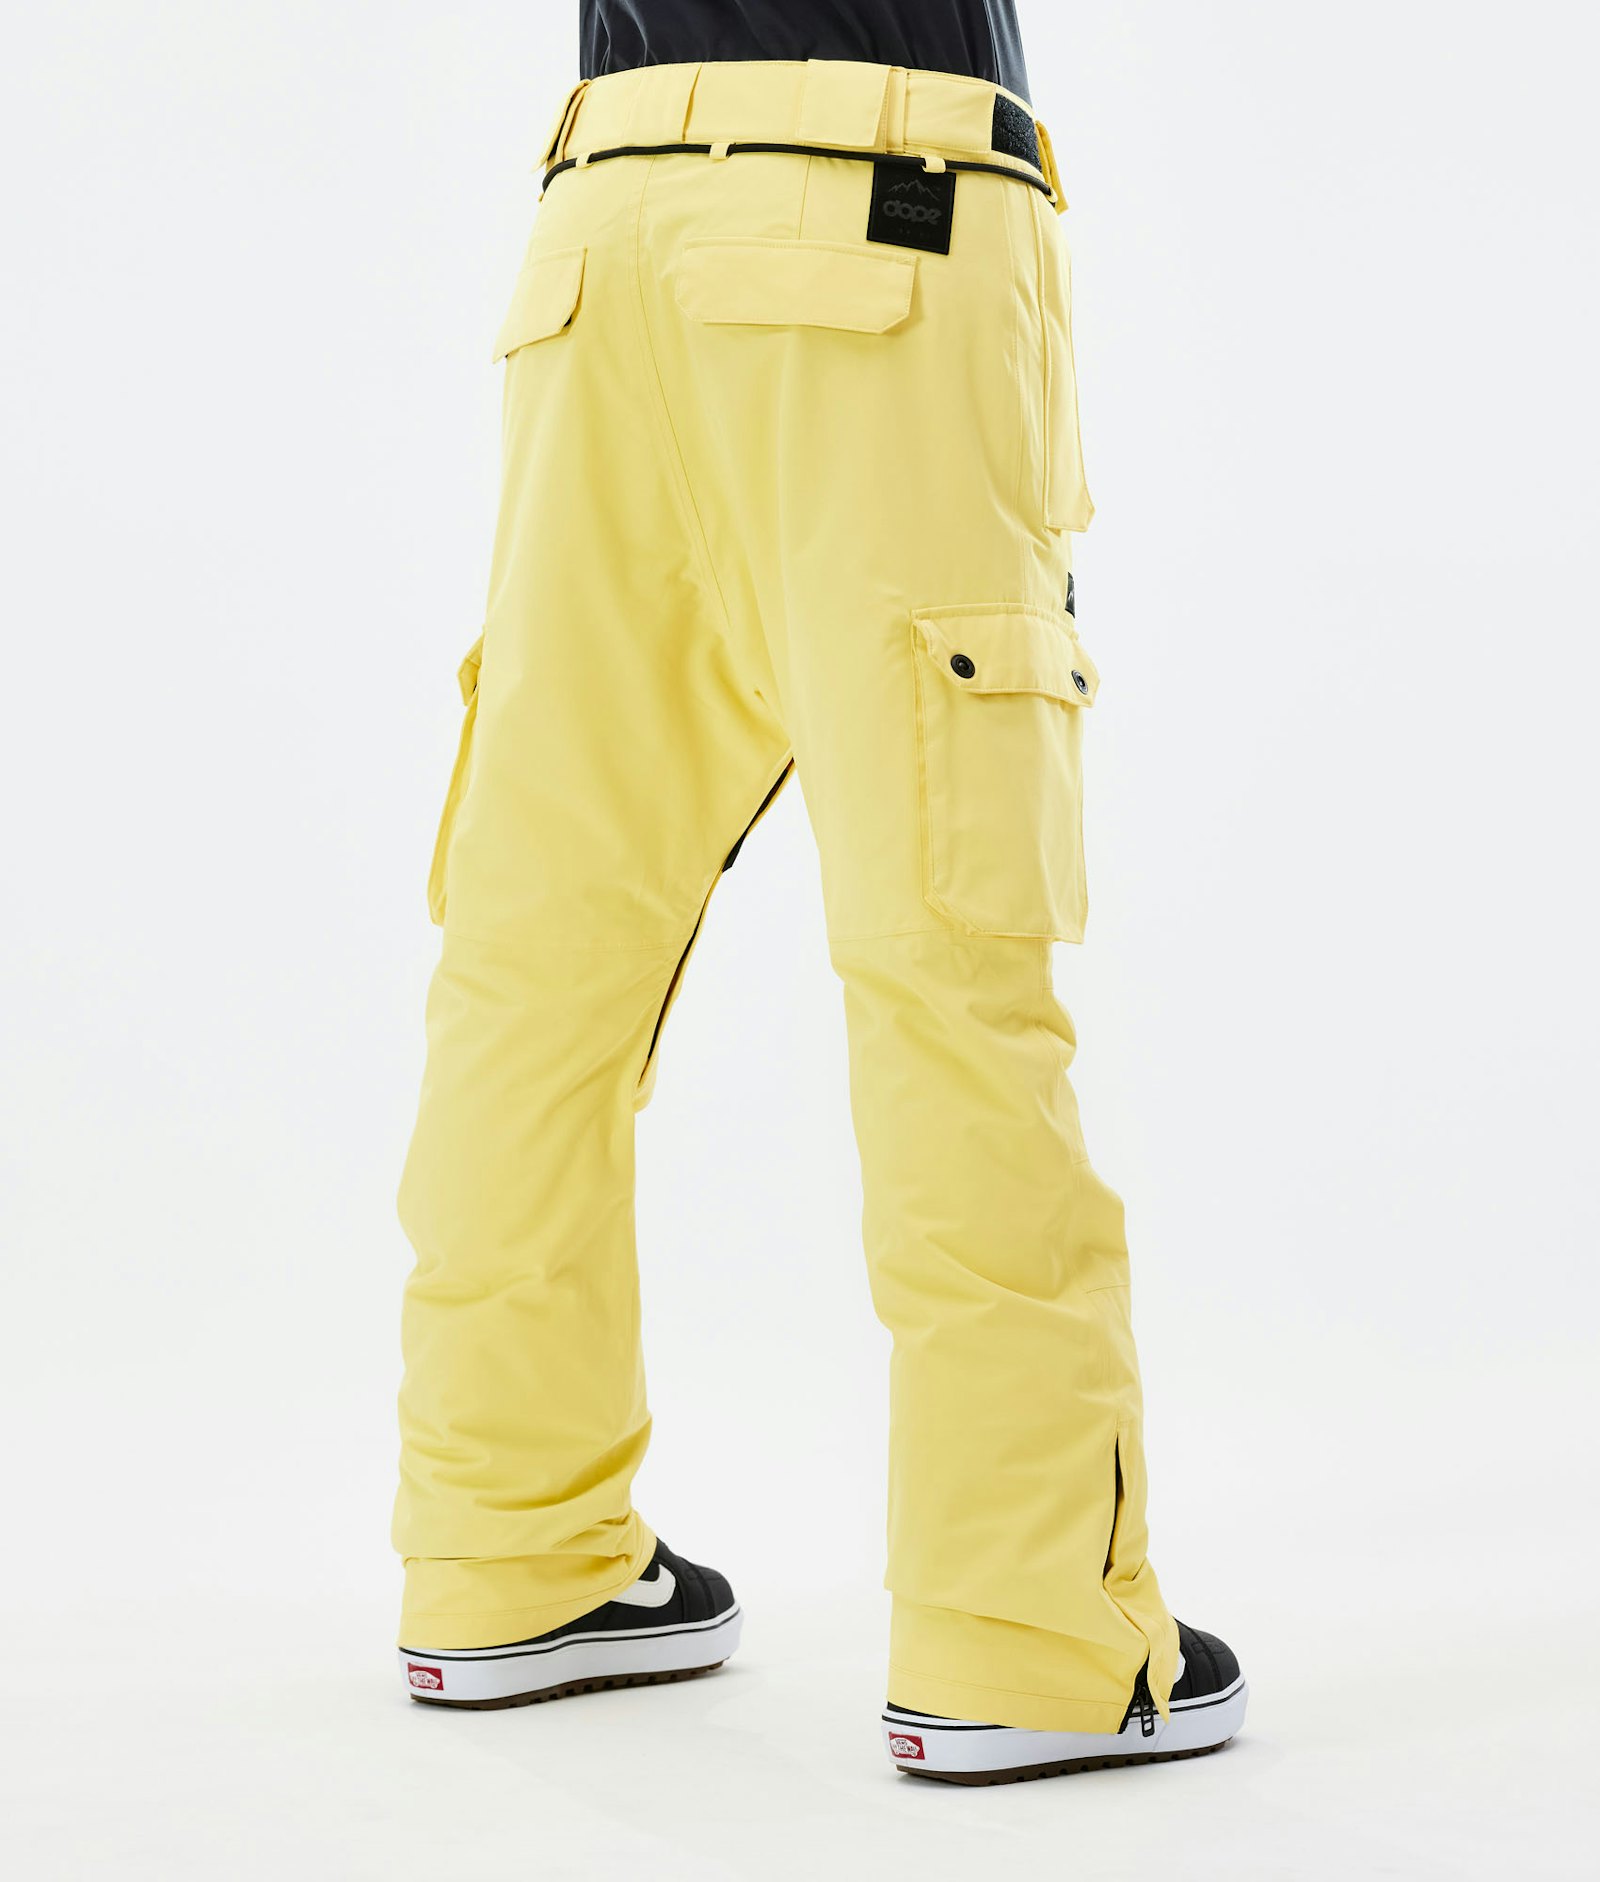 Dope Iconic W 2021 Snowboard Pants Women Faded Yellow